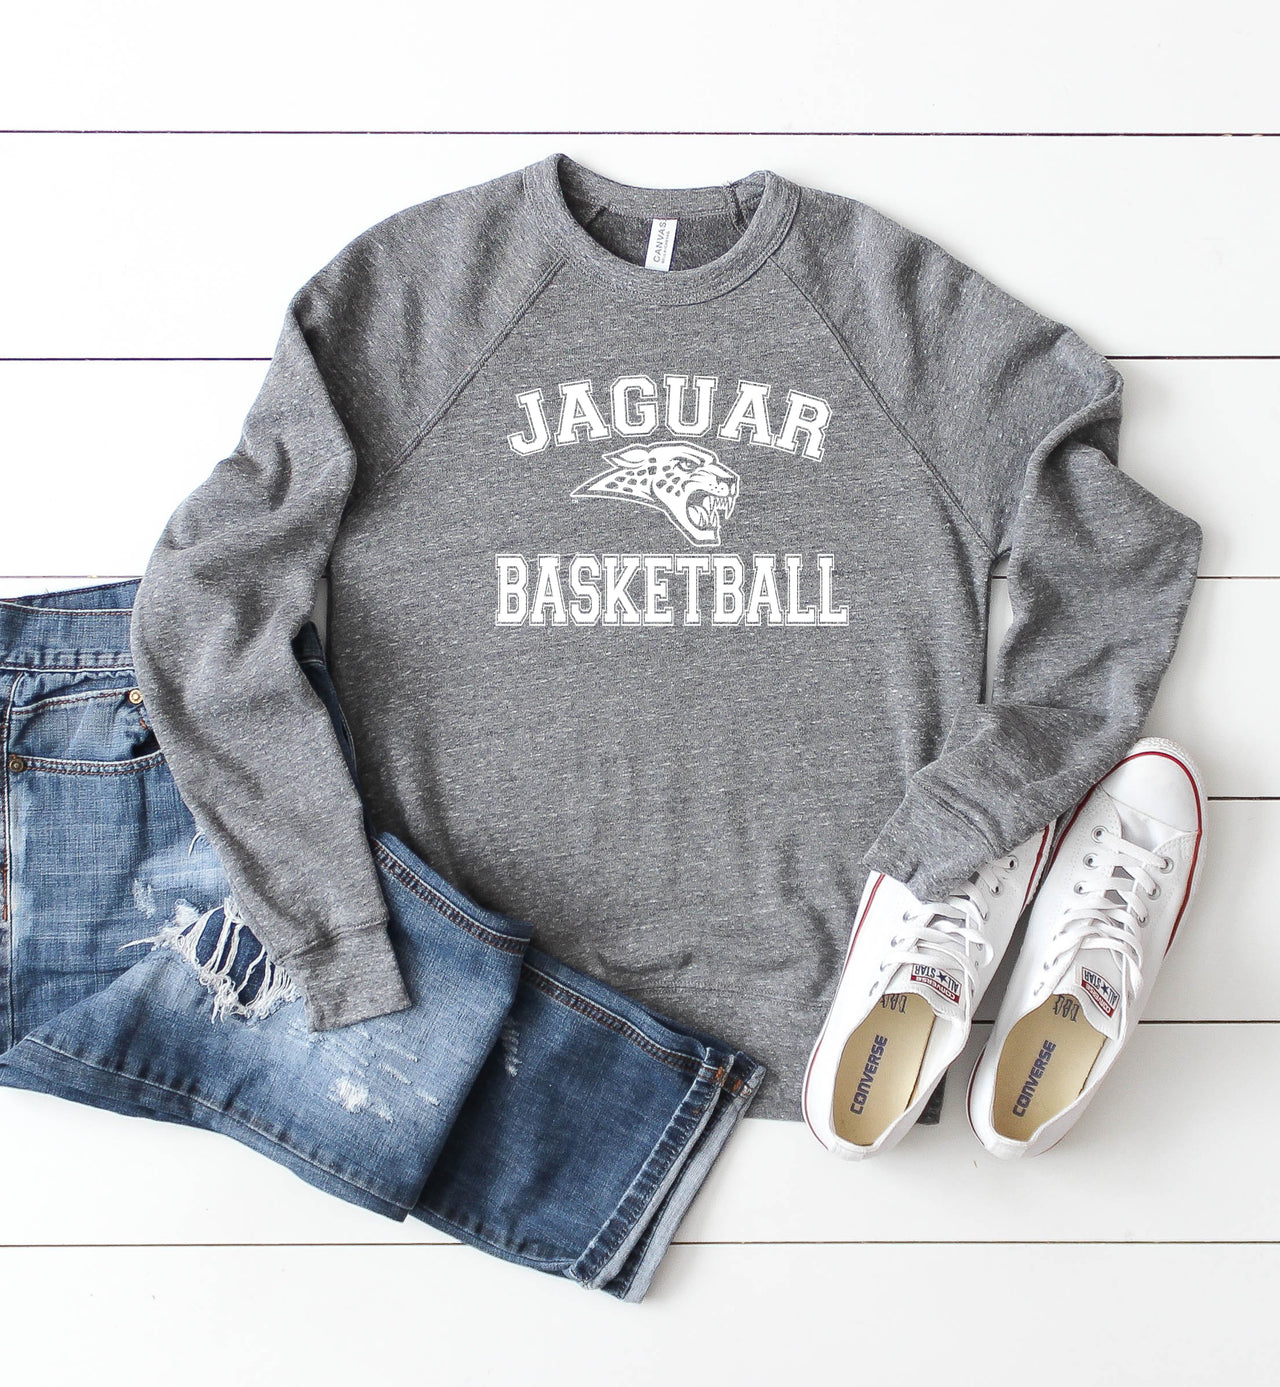 Adult - (6 Apparel Options) - Jaguars Basketball Collection